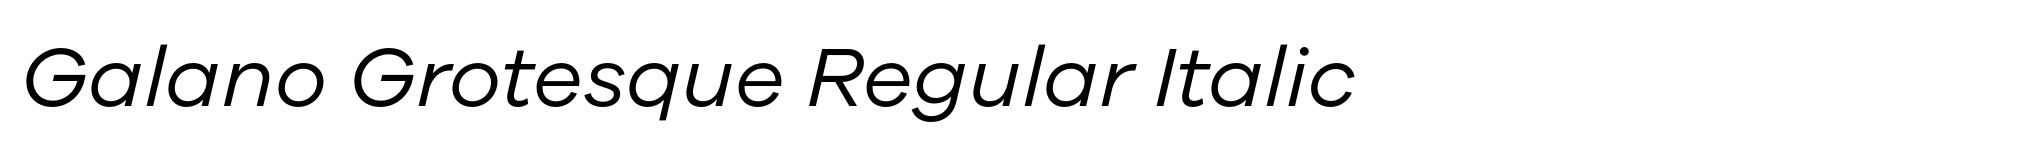 Galano Grotesque Regular Italic image